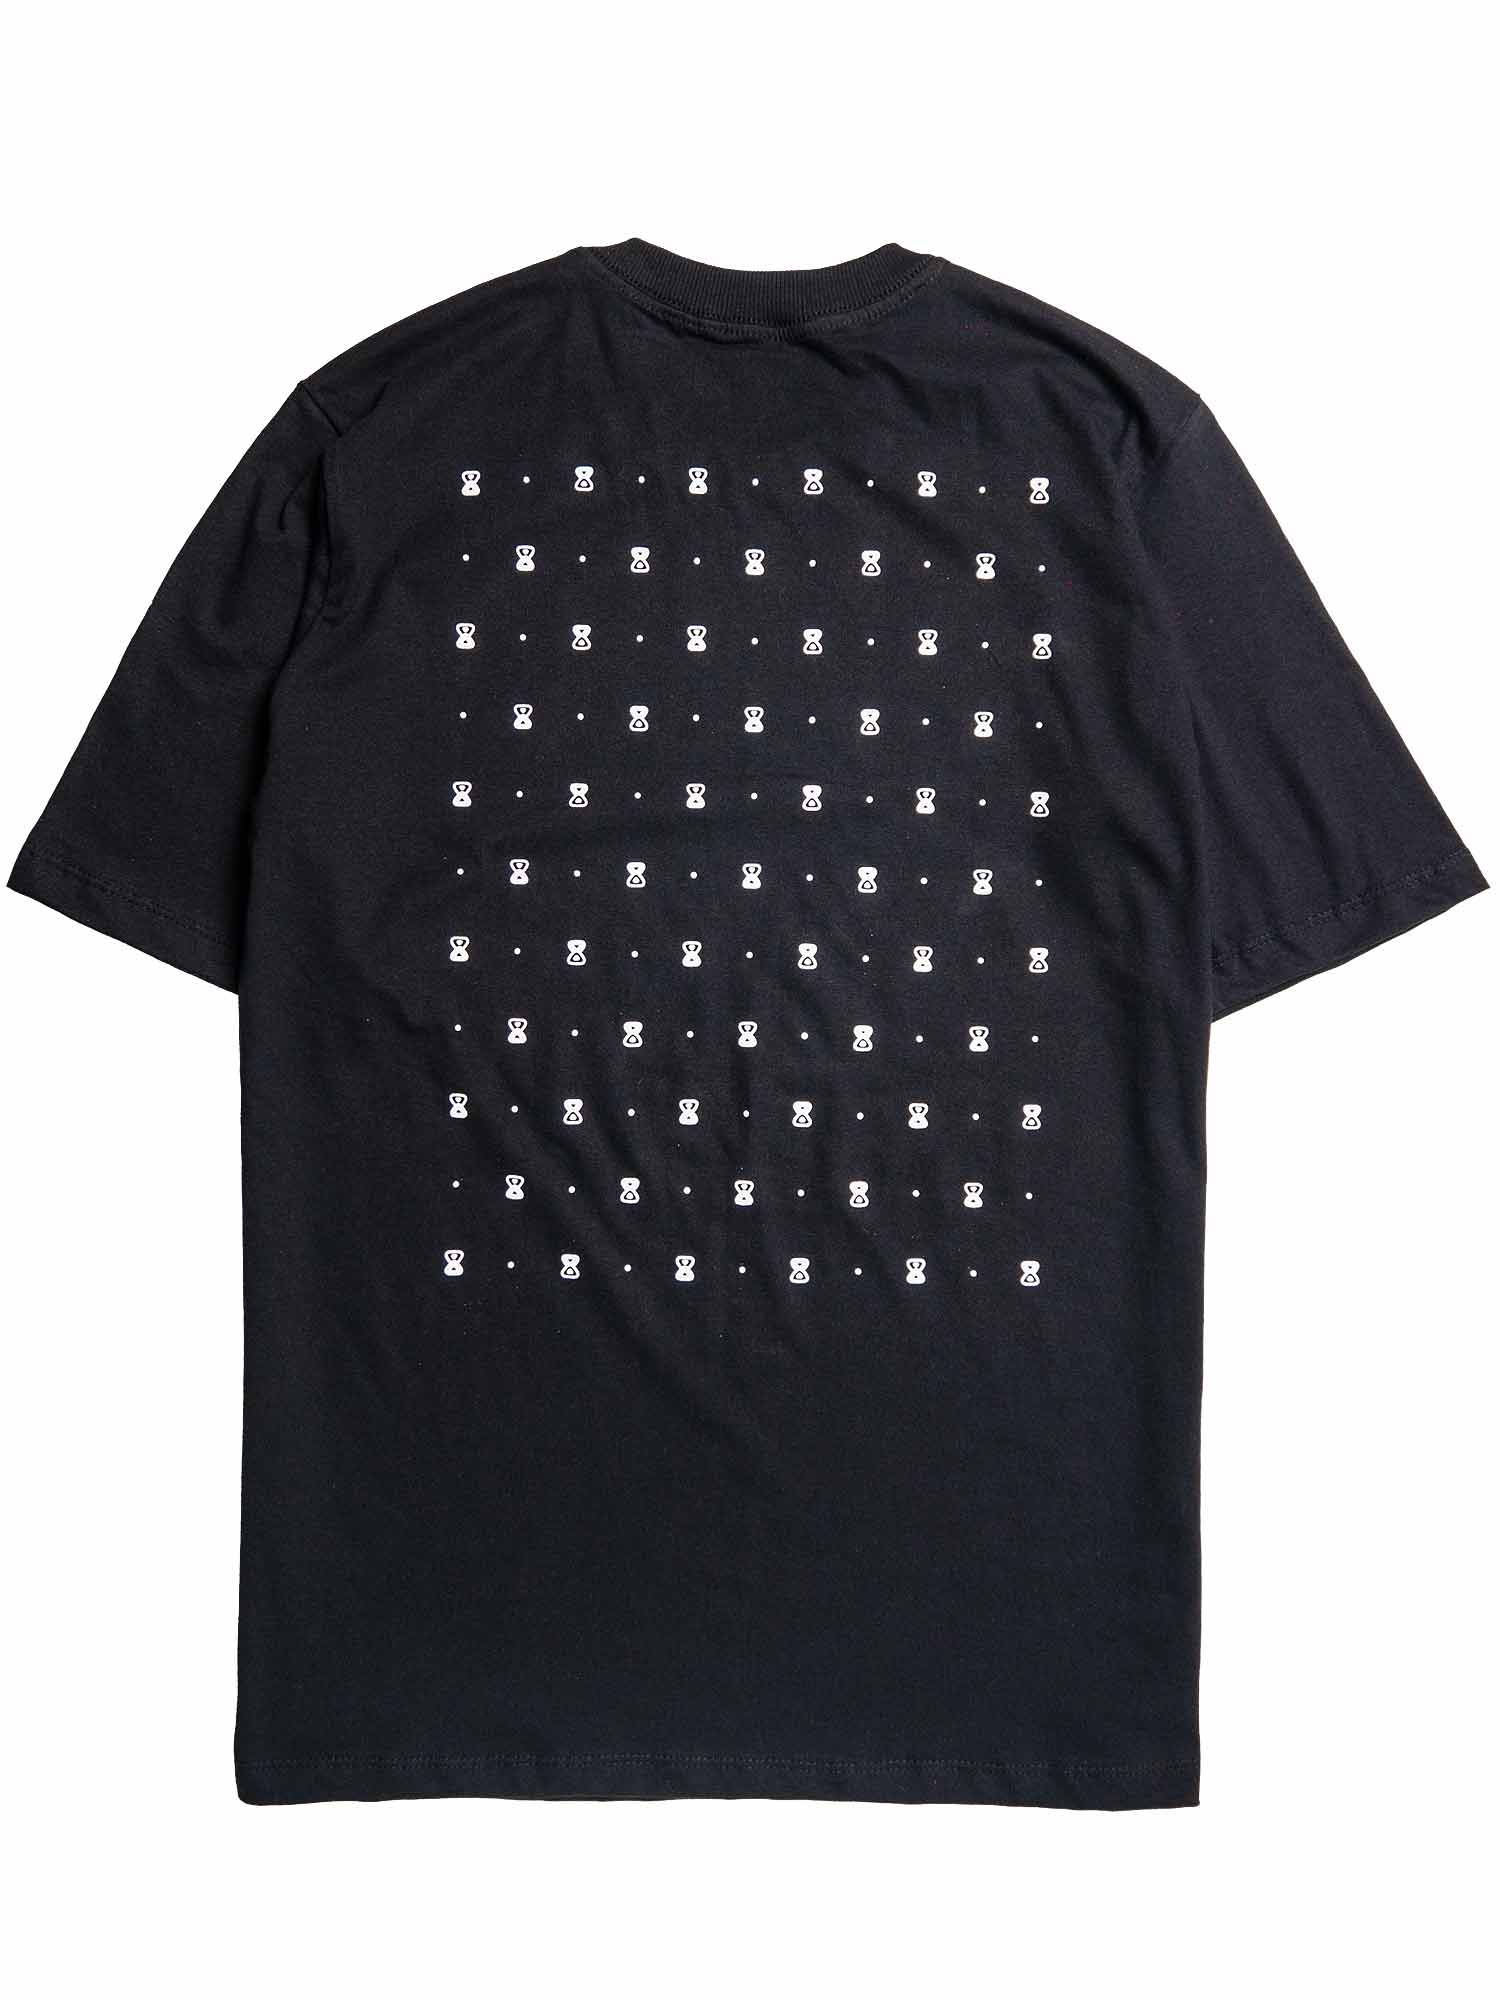 Camiseta-Future-Texturized-Preta-Costas